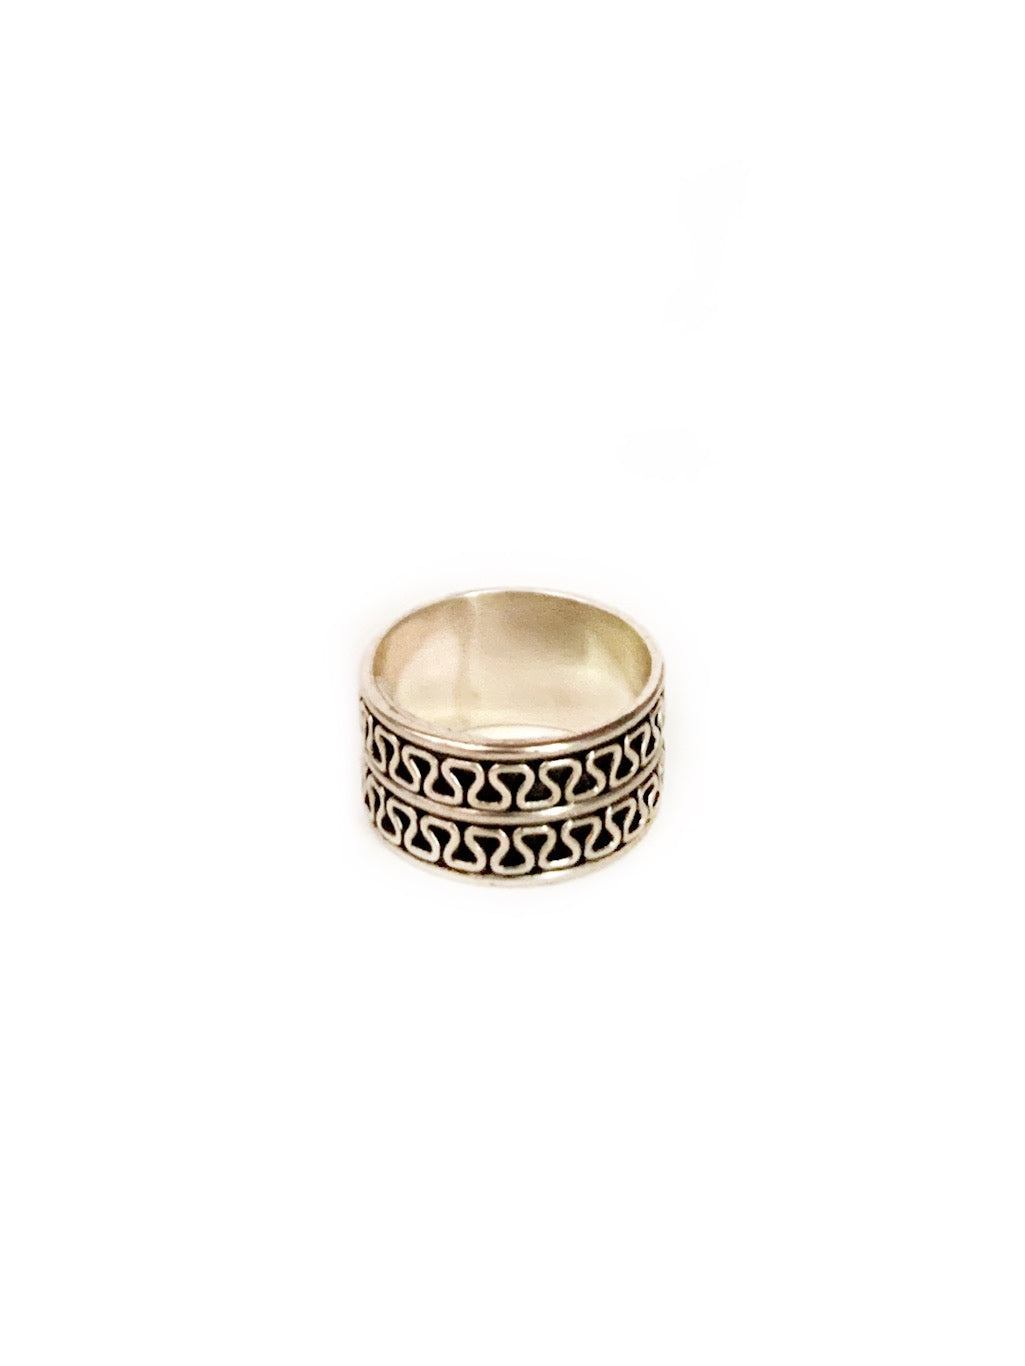 Swiggle design silver ring